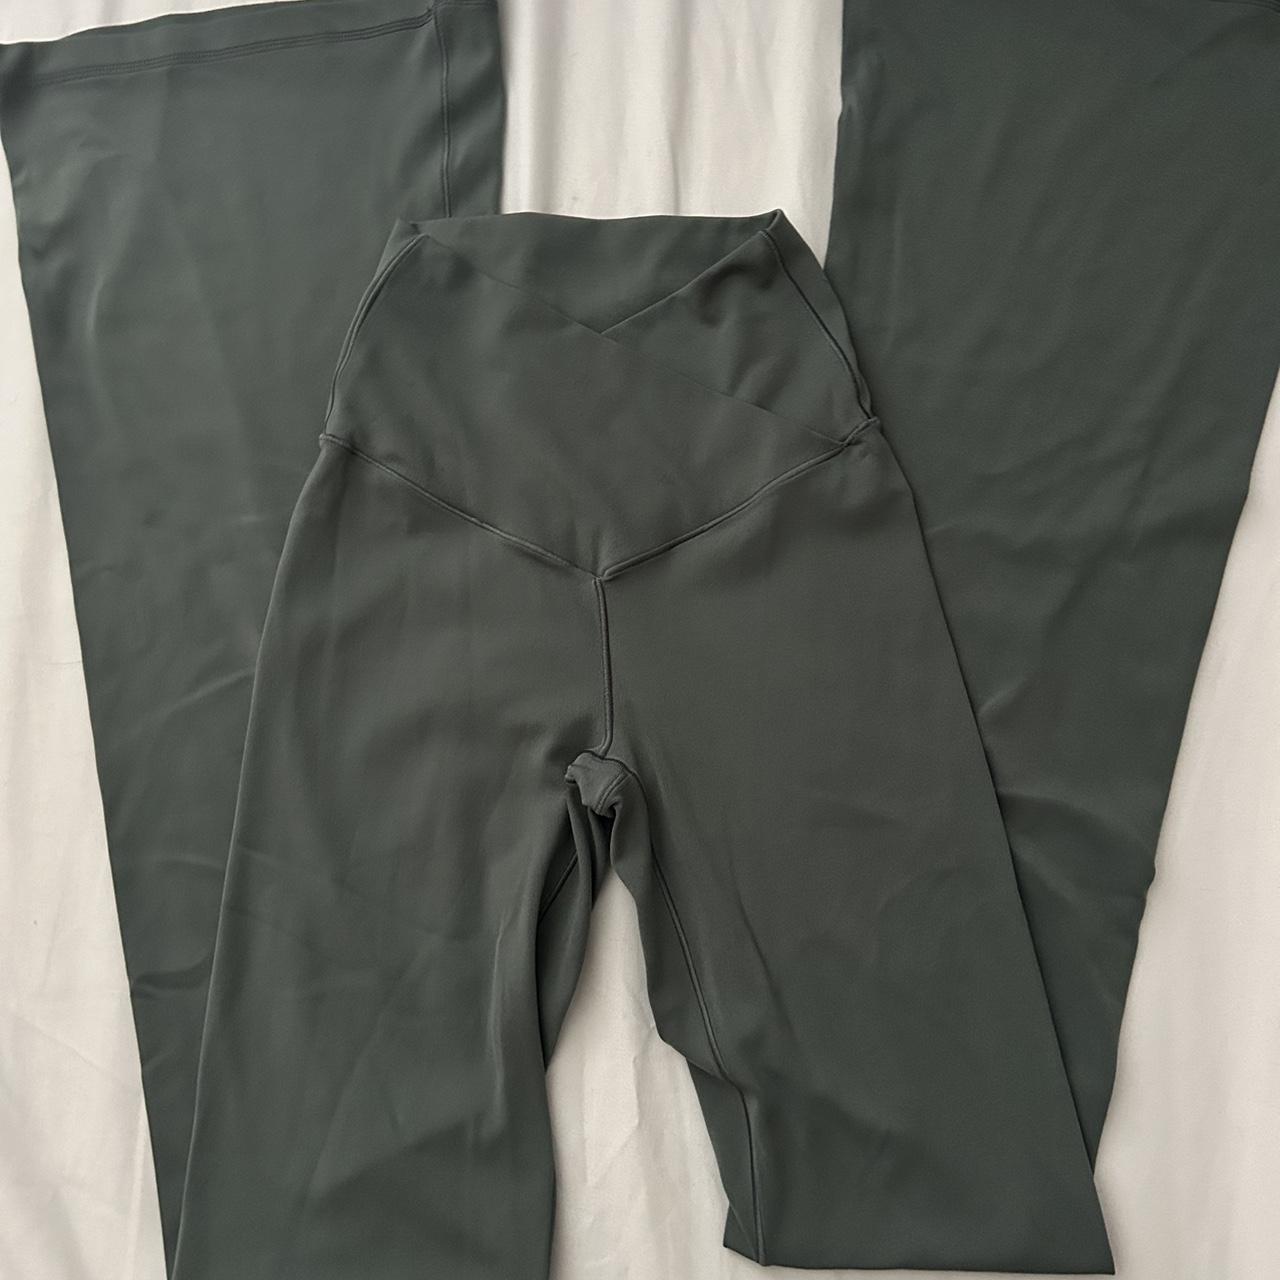 Old Navy Teal Crossover Flare Yoga Pants - Depop